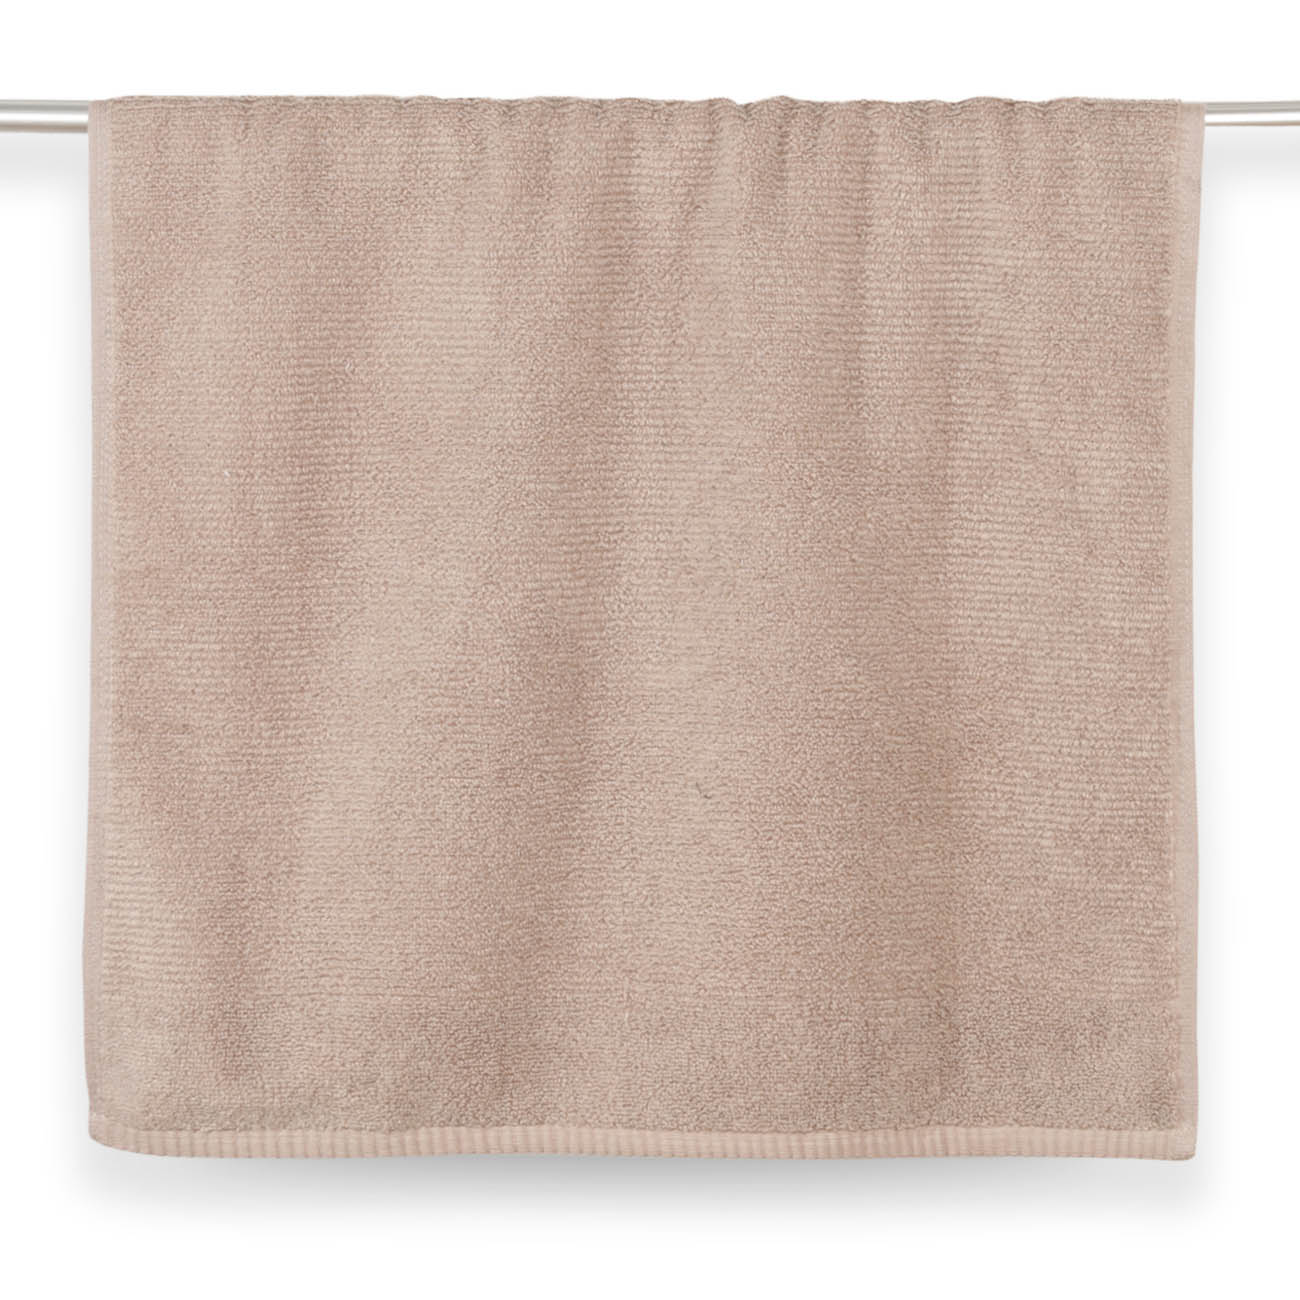 Towel, 50x90 cm, cotton, brown, Terry cotton изображение № 2